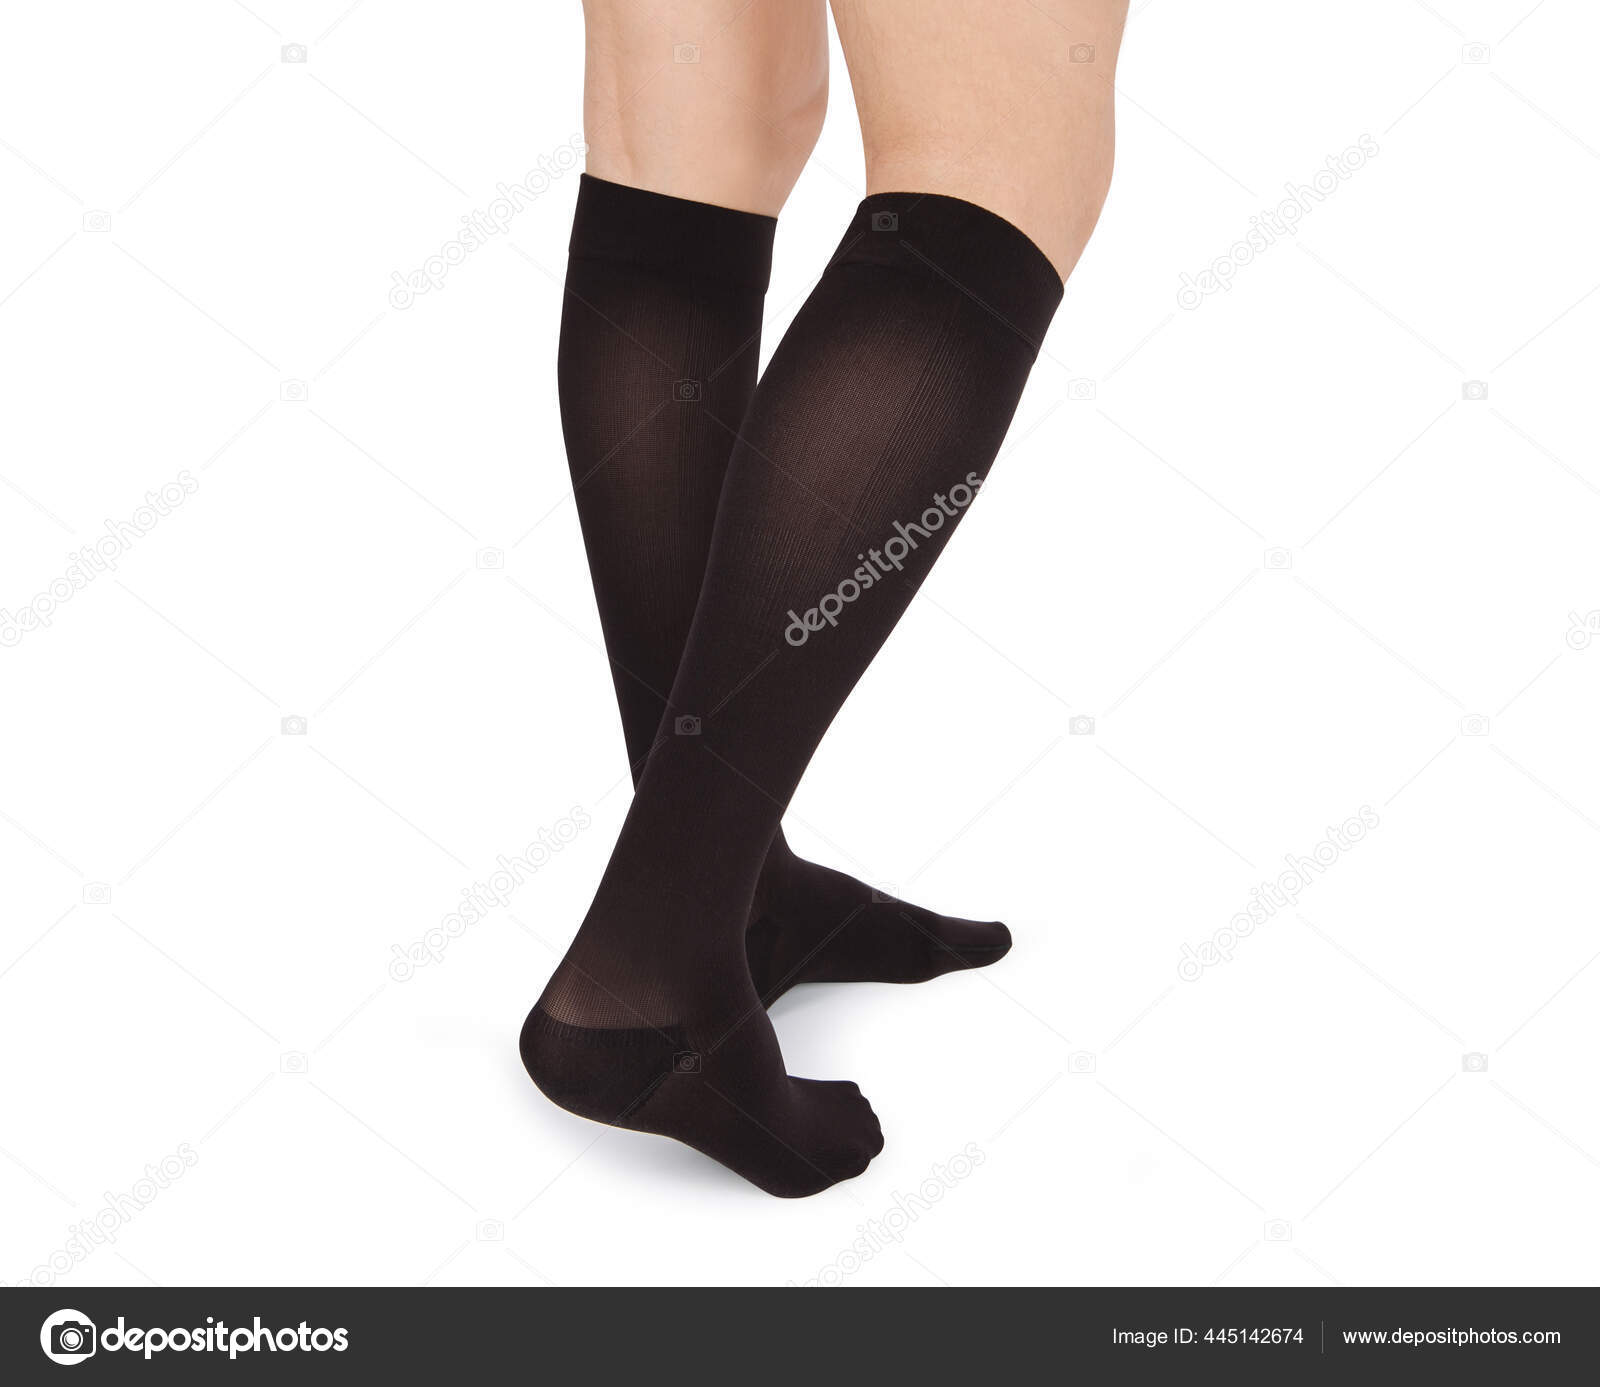 https://st2.depositphotos.com/33757592/44514/i/1600/depositphotos_445142674-stock-photo-compression-hosiery-medical-compression-stockings.jpg